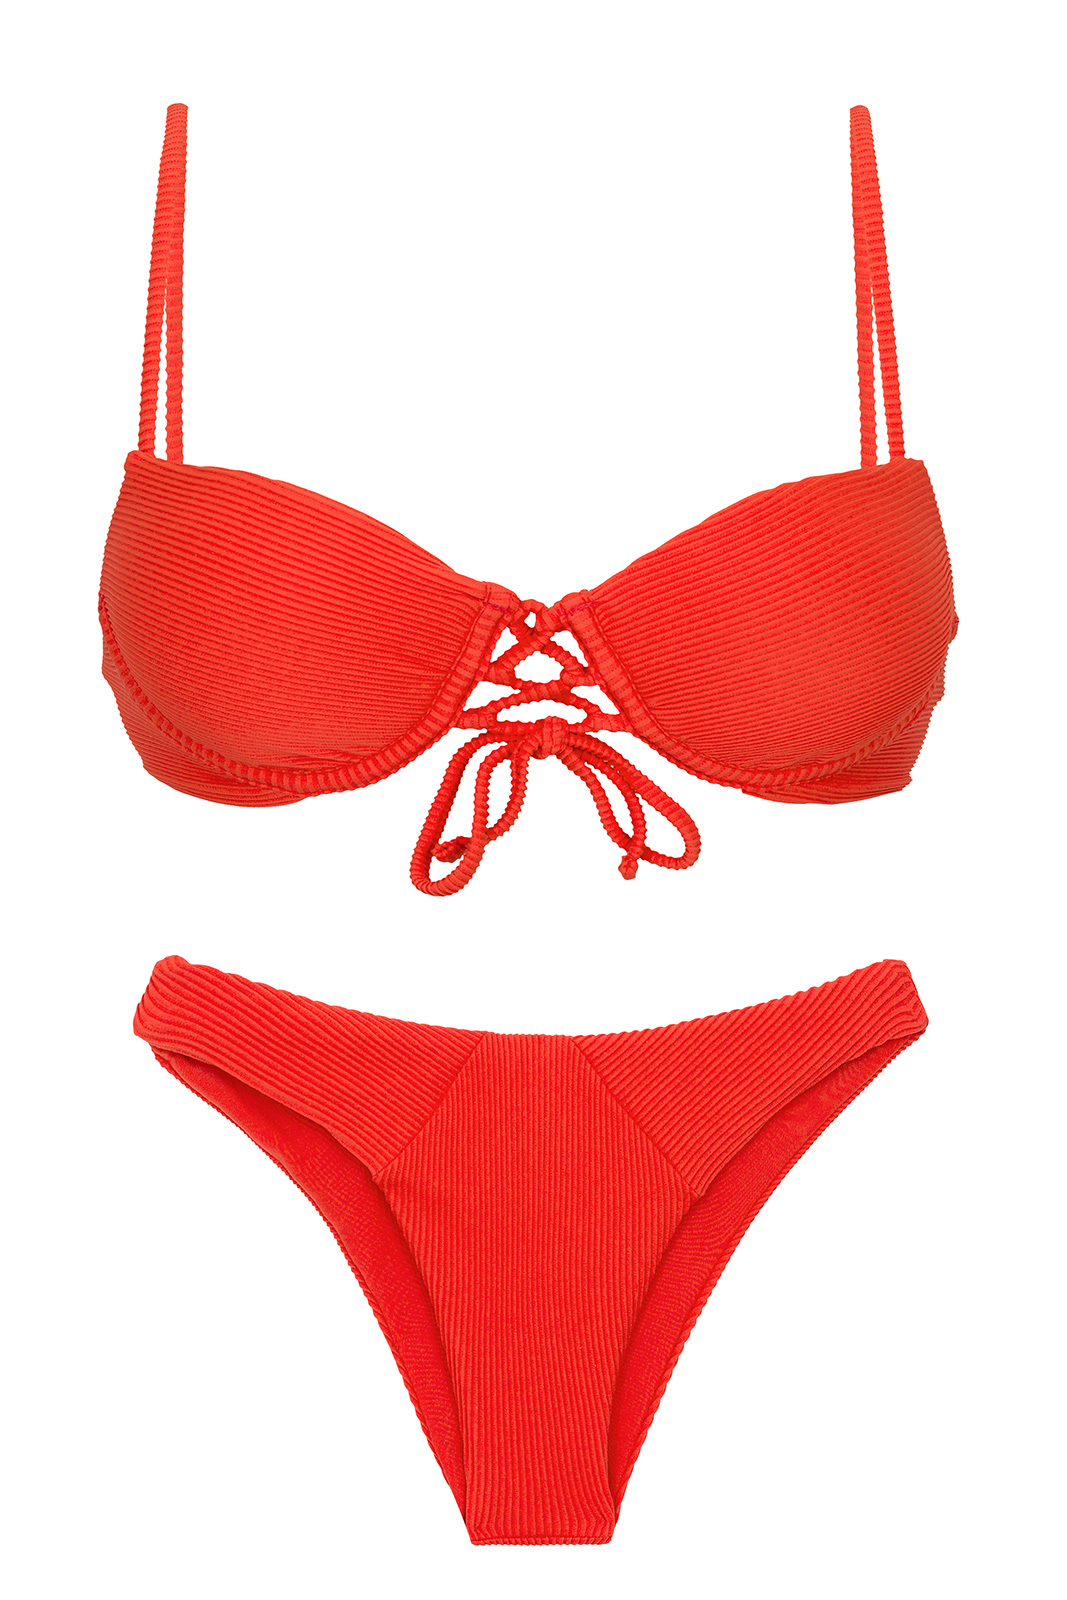 zo compromis Bekritiseren Textured Red Push-up Balconette Bikini With High-leg Bottom - Set  Cotele-tomate Balconet-pushup Lisboa - Rio de Sol